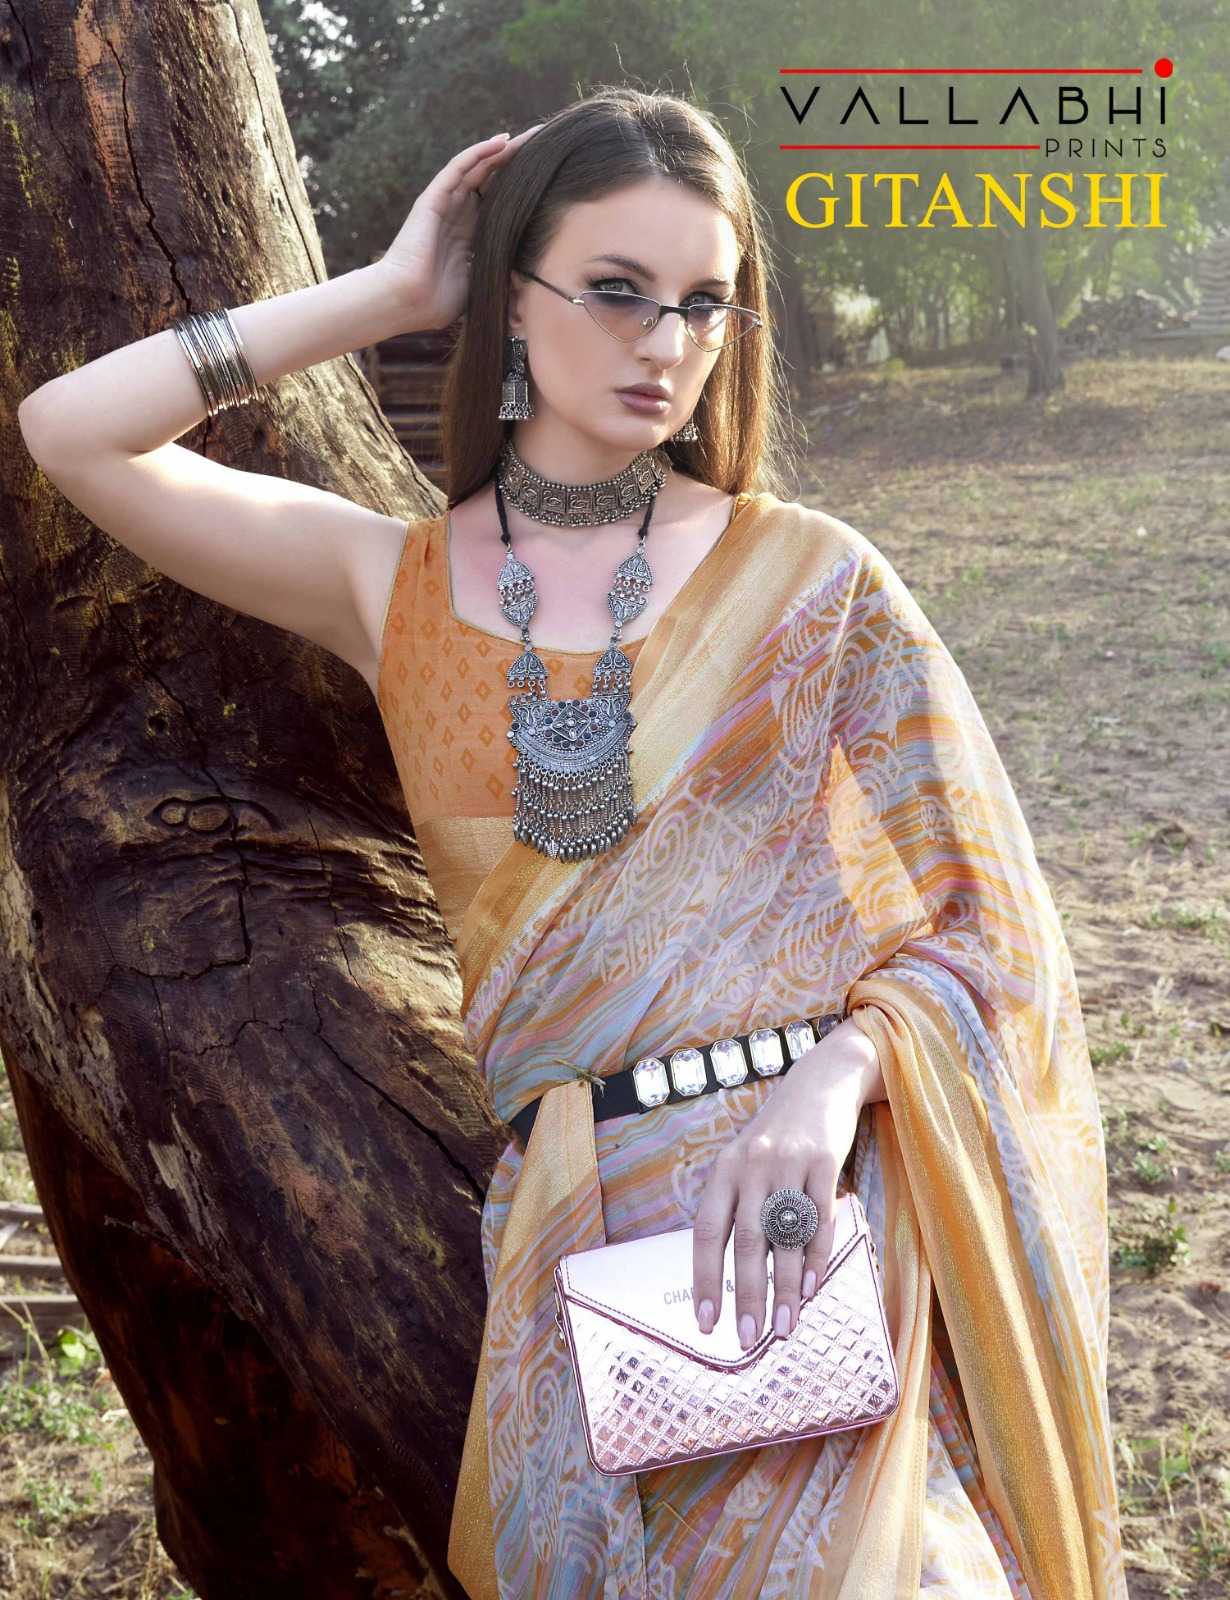 vallabhi prints gitanshi 26951-26956 classy look georgette printed sarees